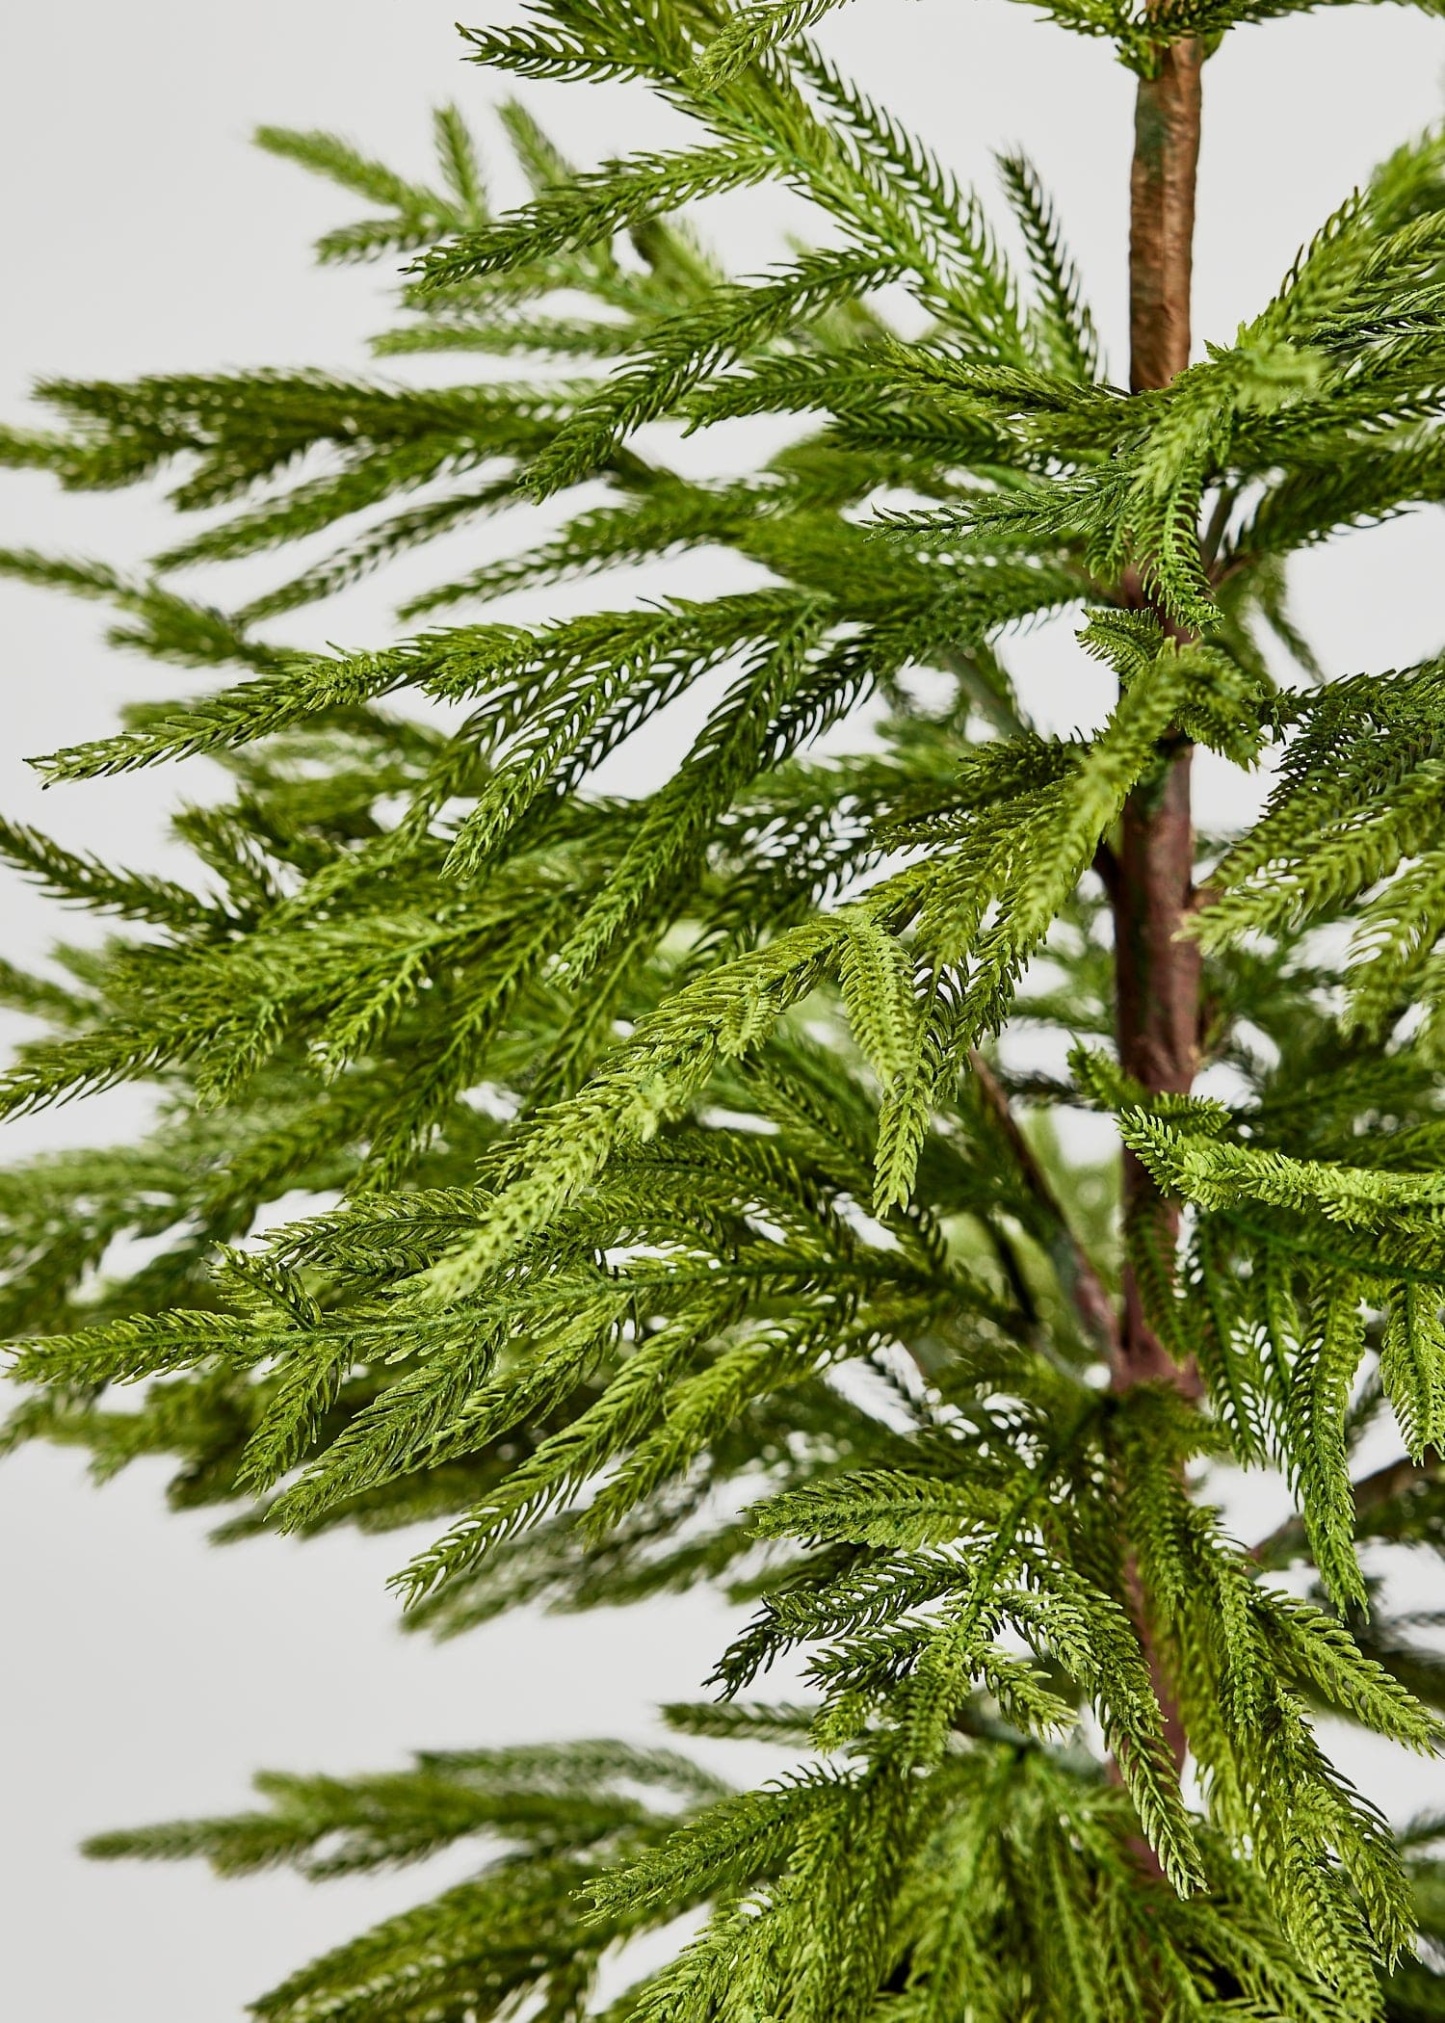 Afloral Artificial Norfolk Pine Tree - 36